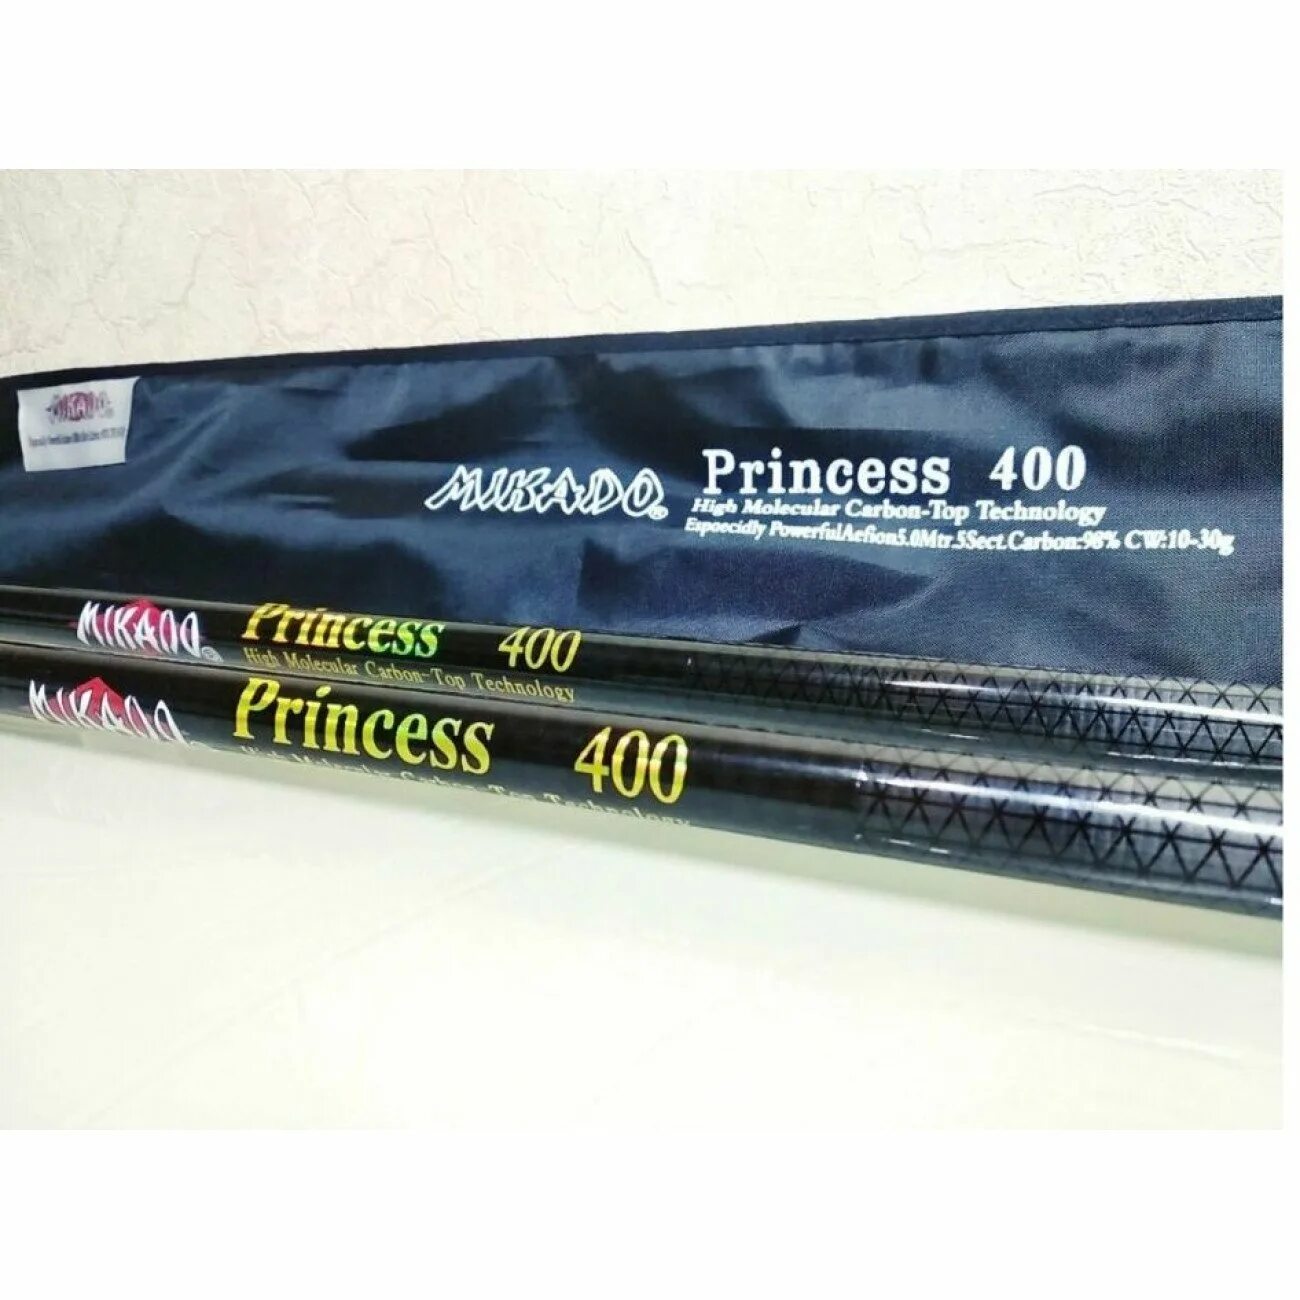 Удочка Микадо принцесс 500. Микадо принцесса 500 маховое. Удочка Mikado Princess 600. Удочка Mikado Princess 400.